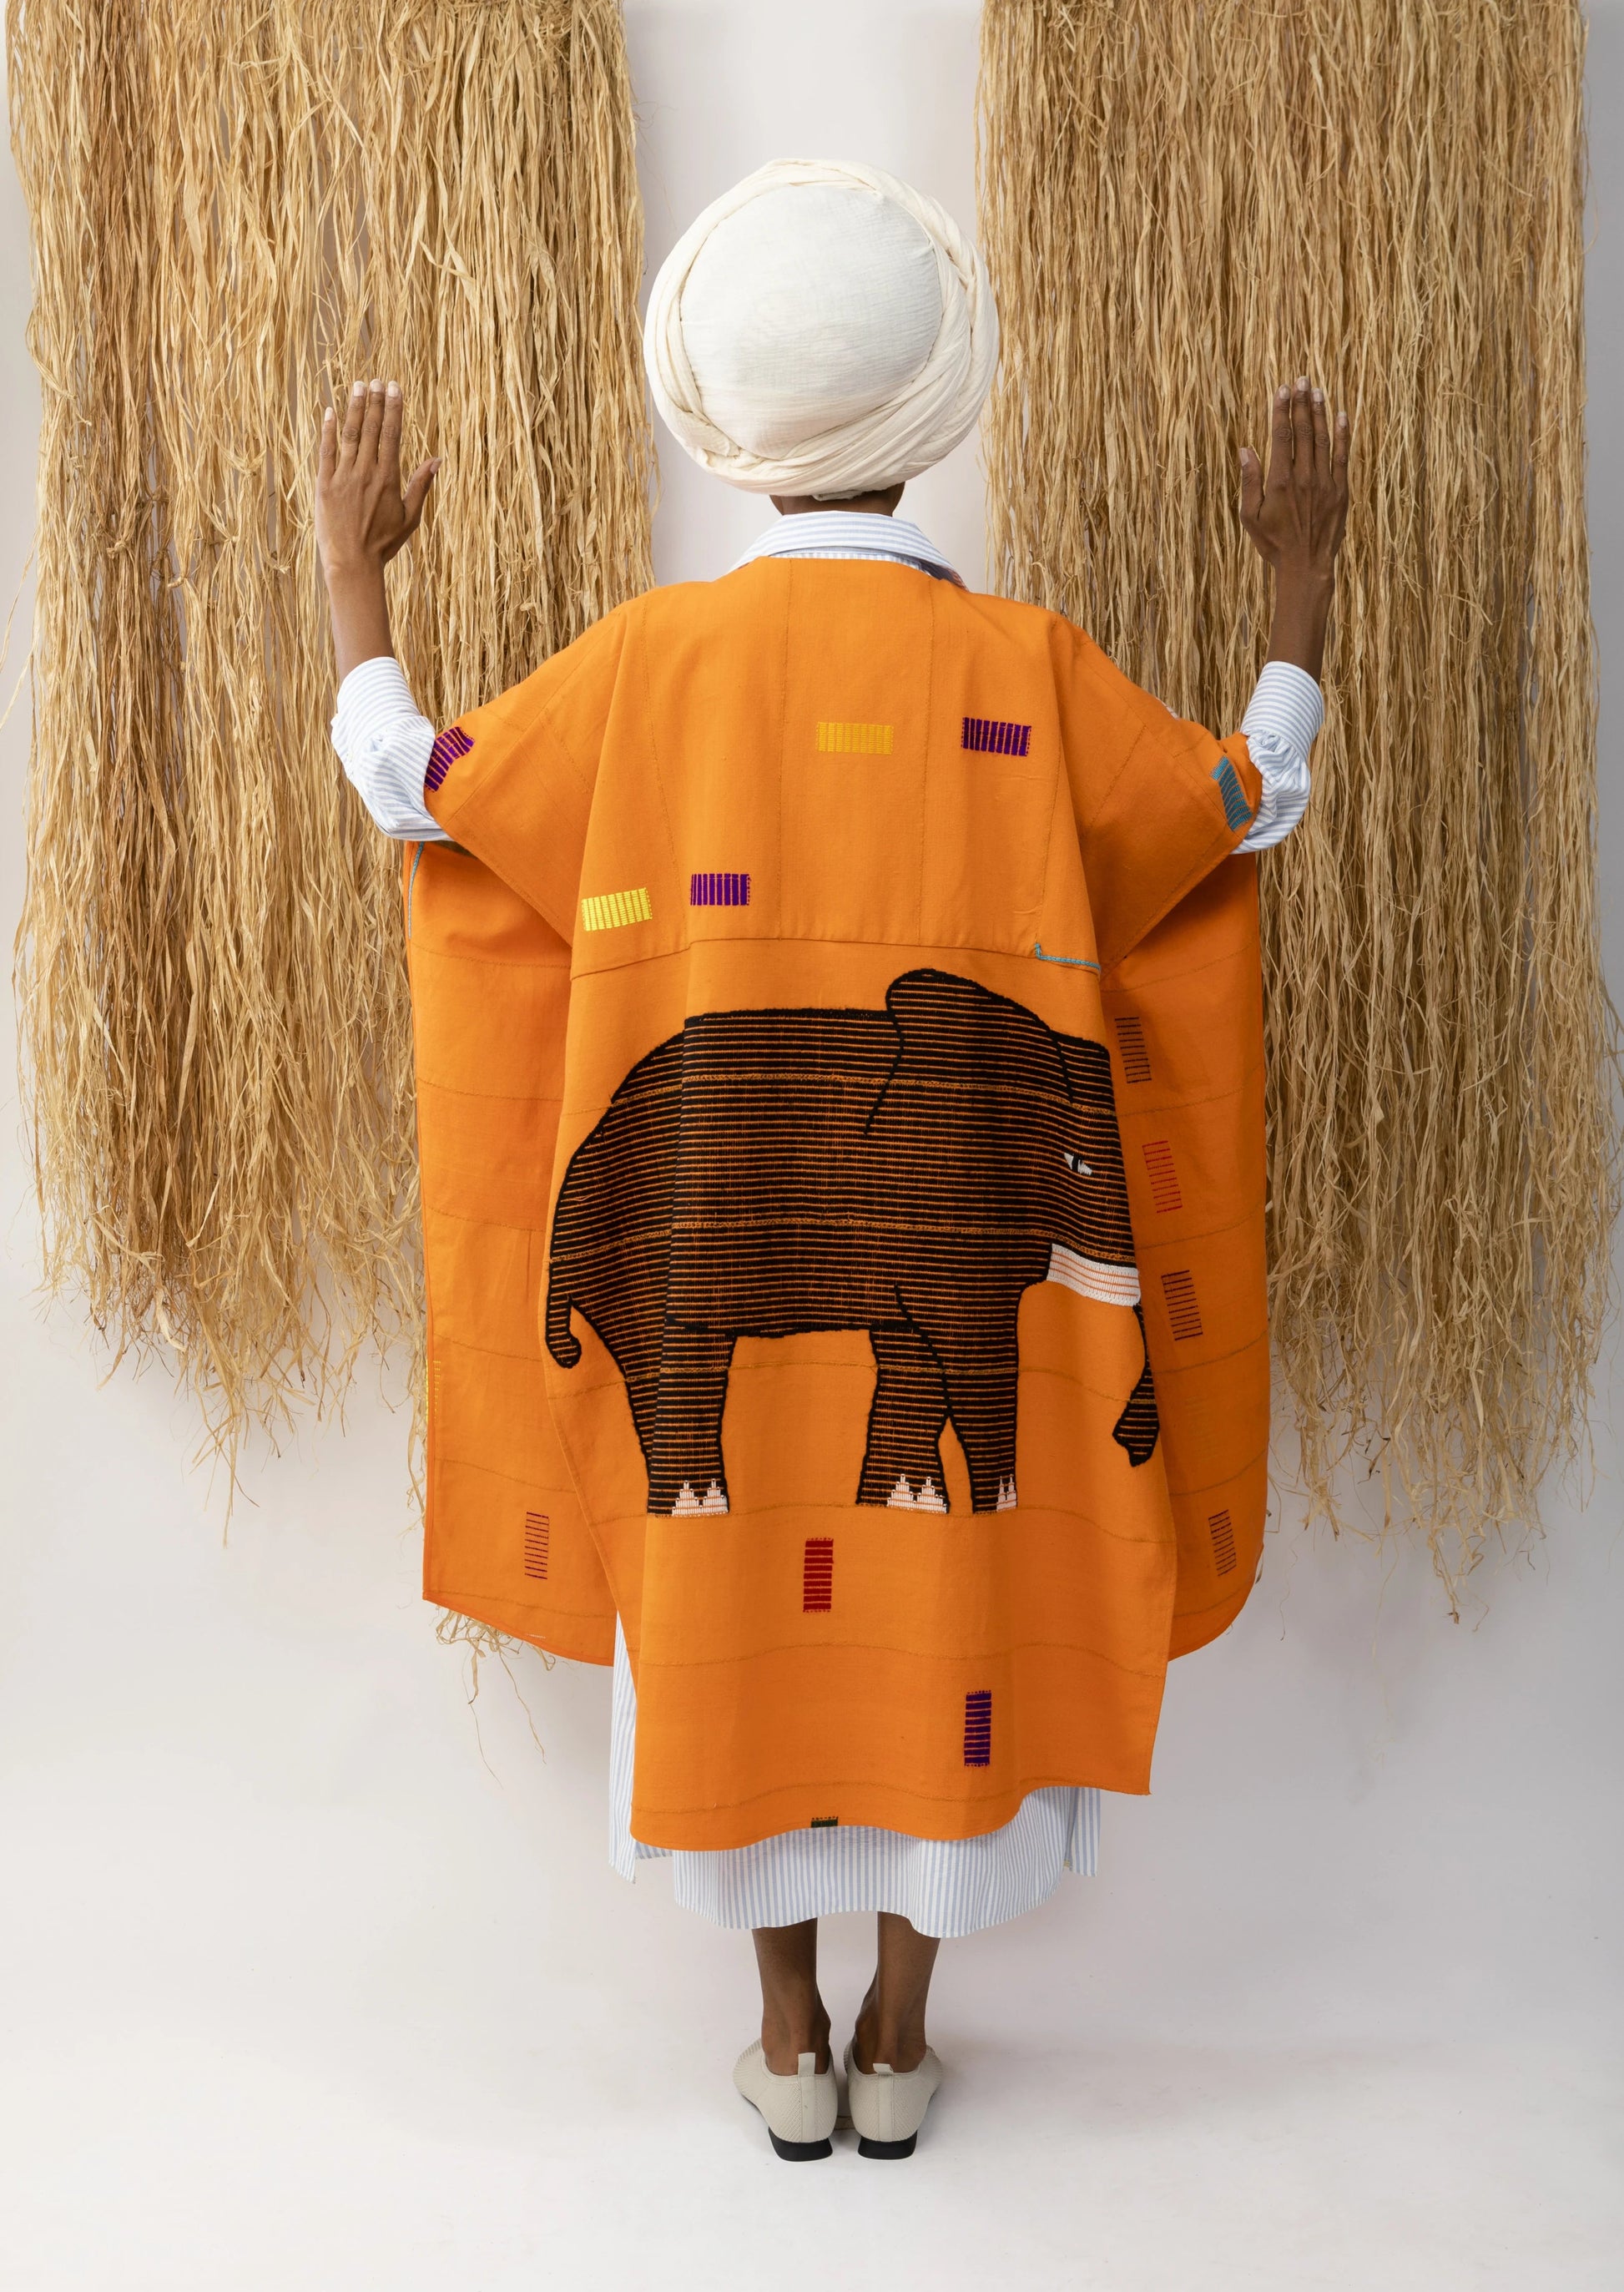 Poncho Cubano - Elephant design New LaurenceAirline Womens 